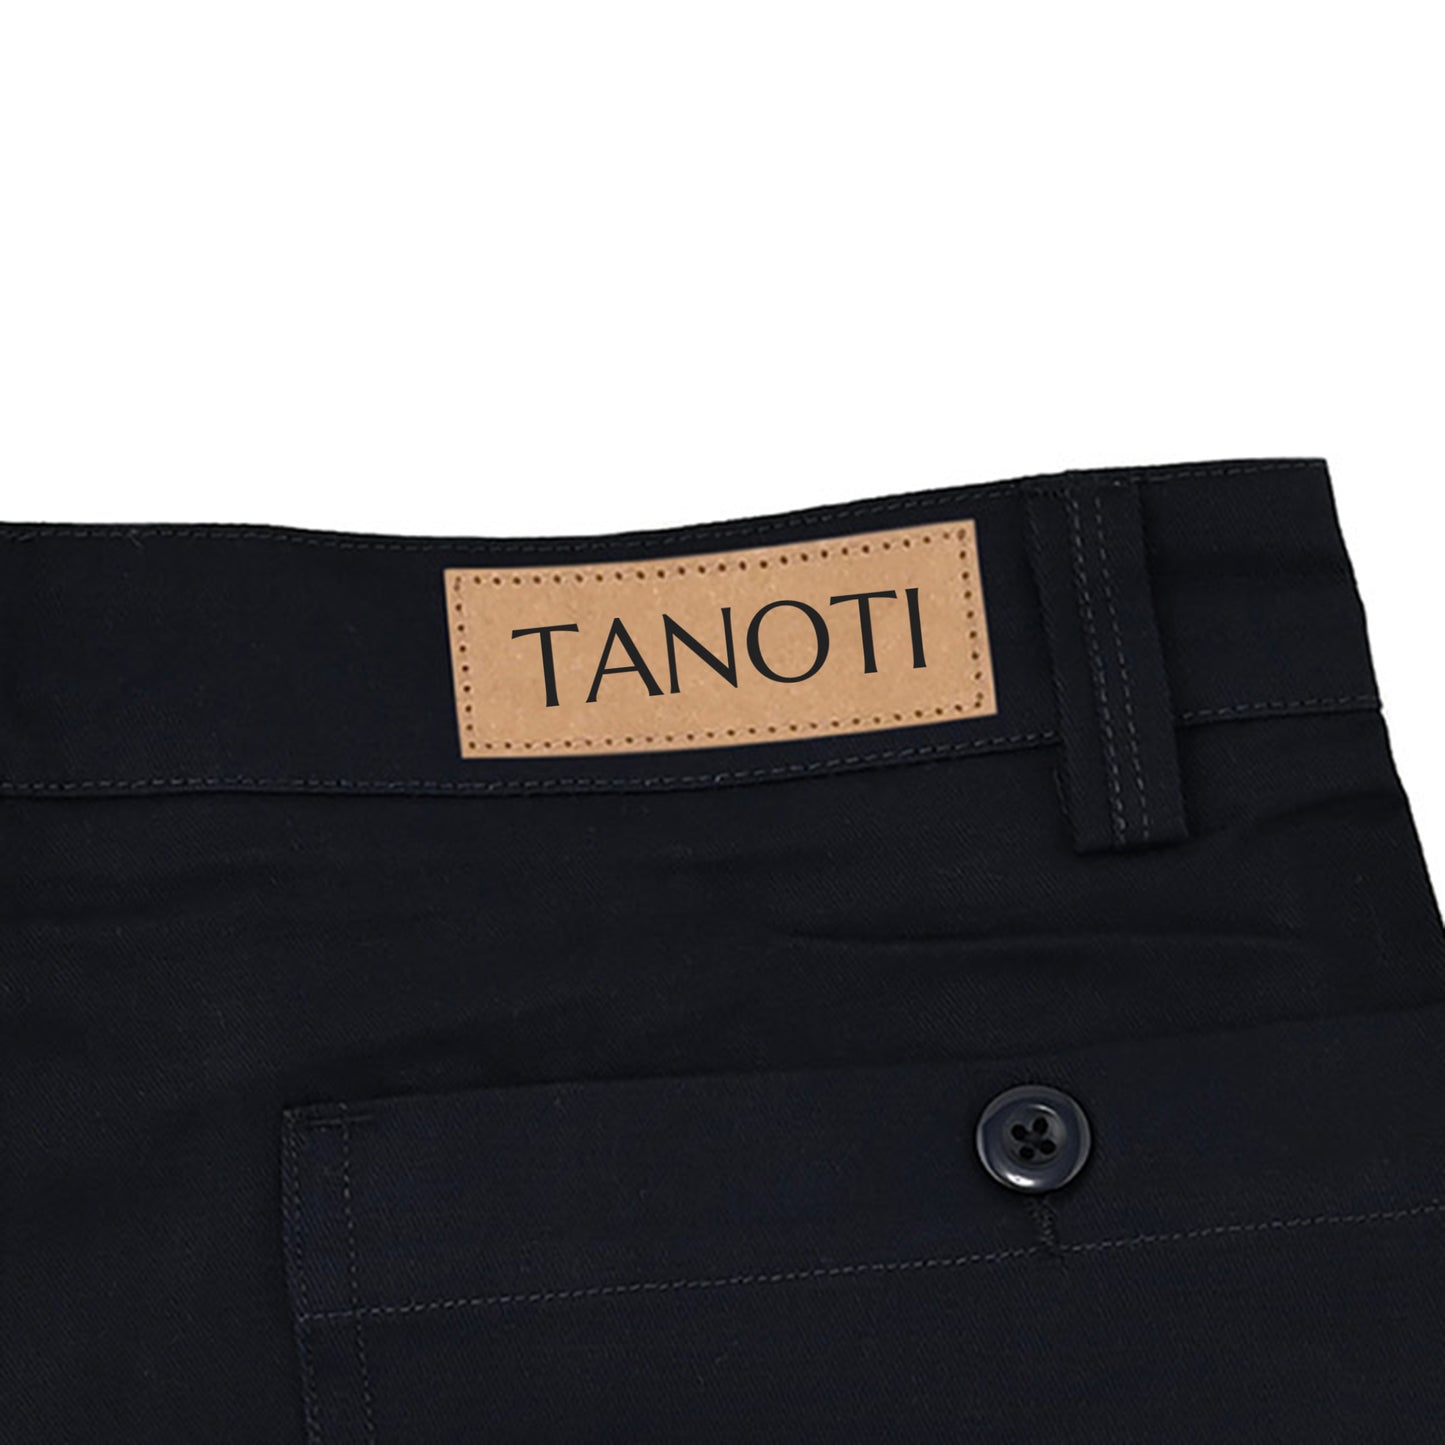 TANOTI Apparel Col. / Chino cloth shorts